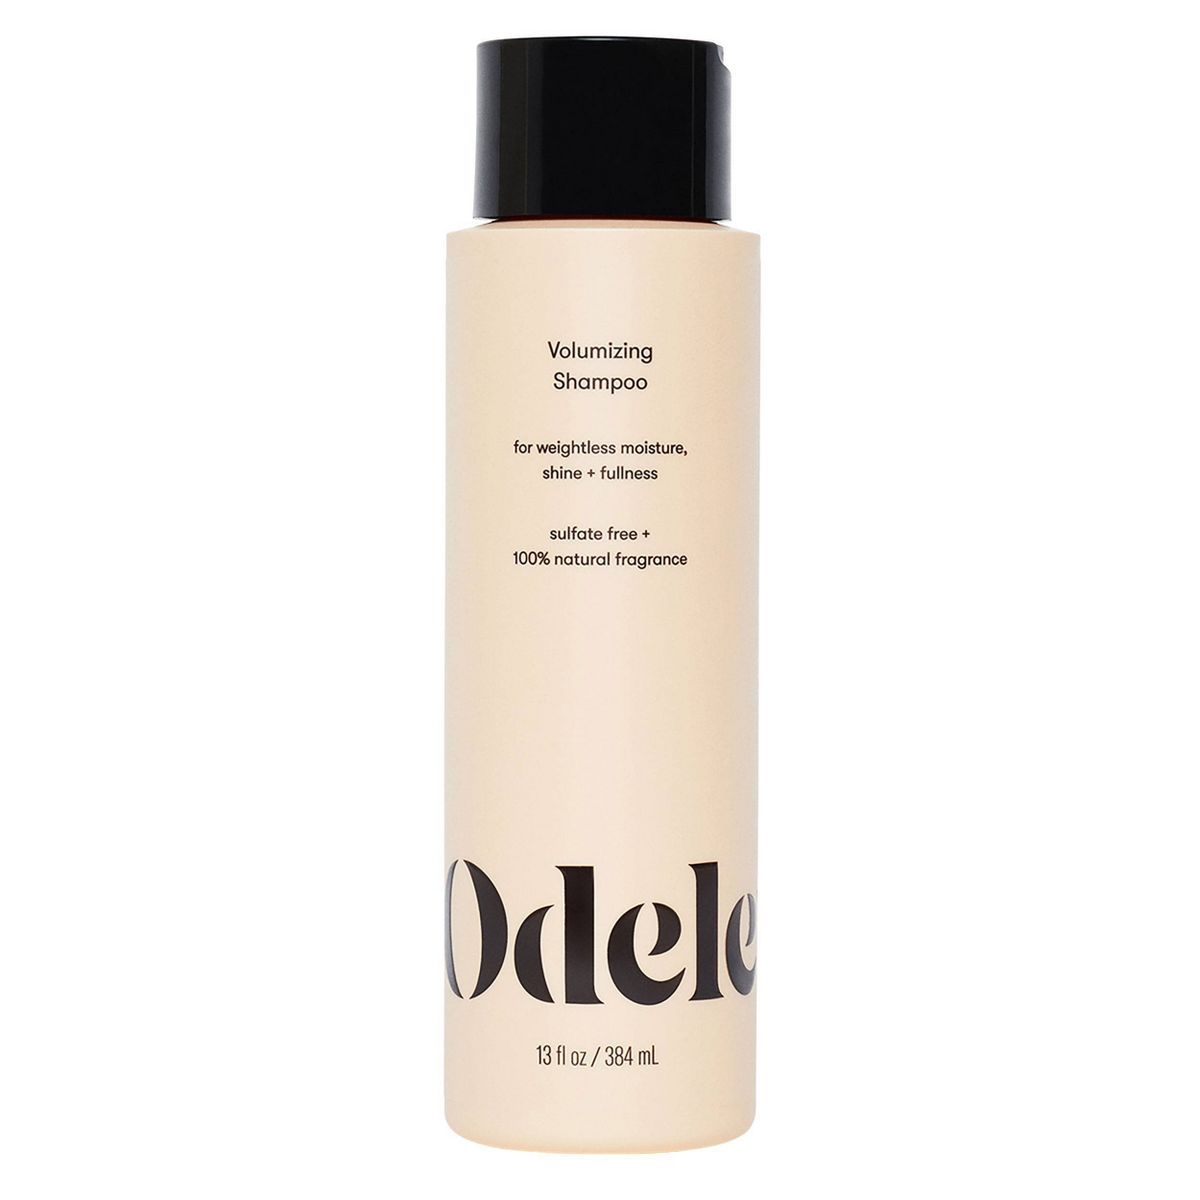 Odele Volumizing Shampoo for Lift + Fullness - 13 fl oz | Target